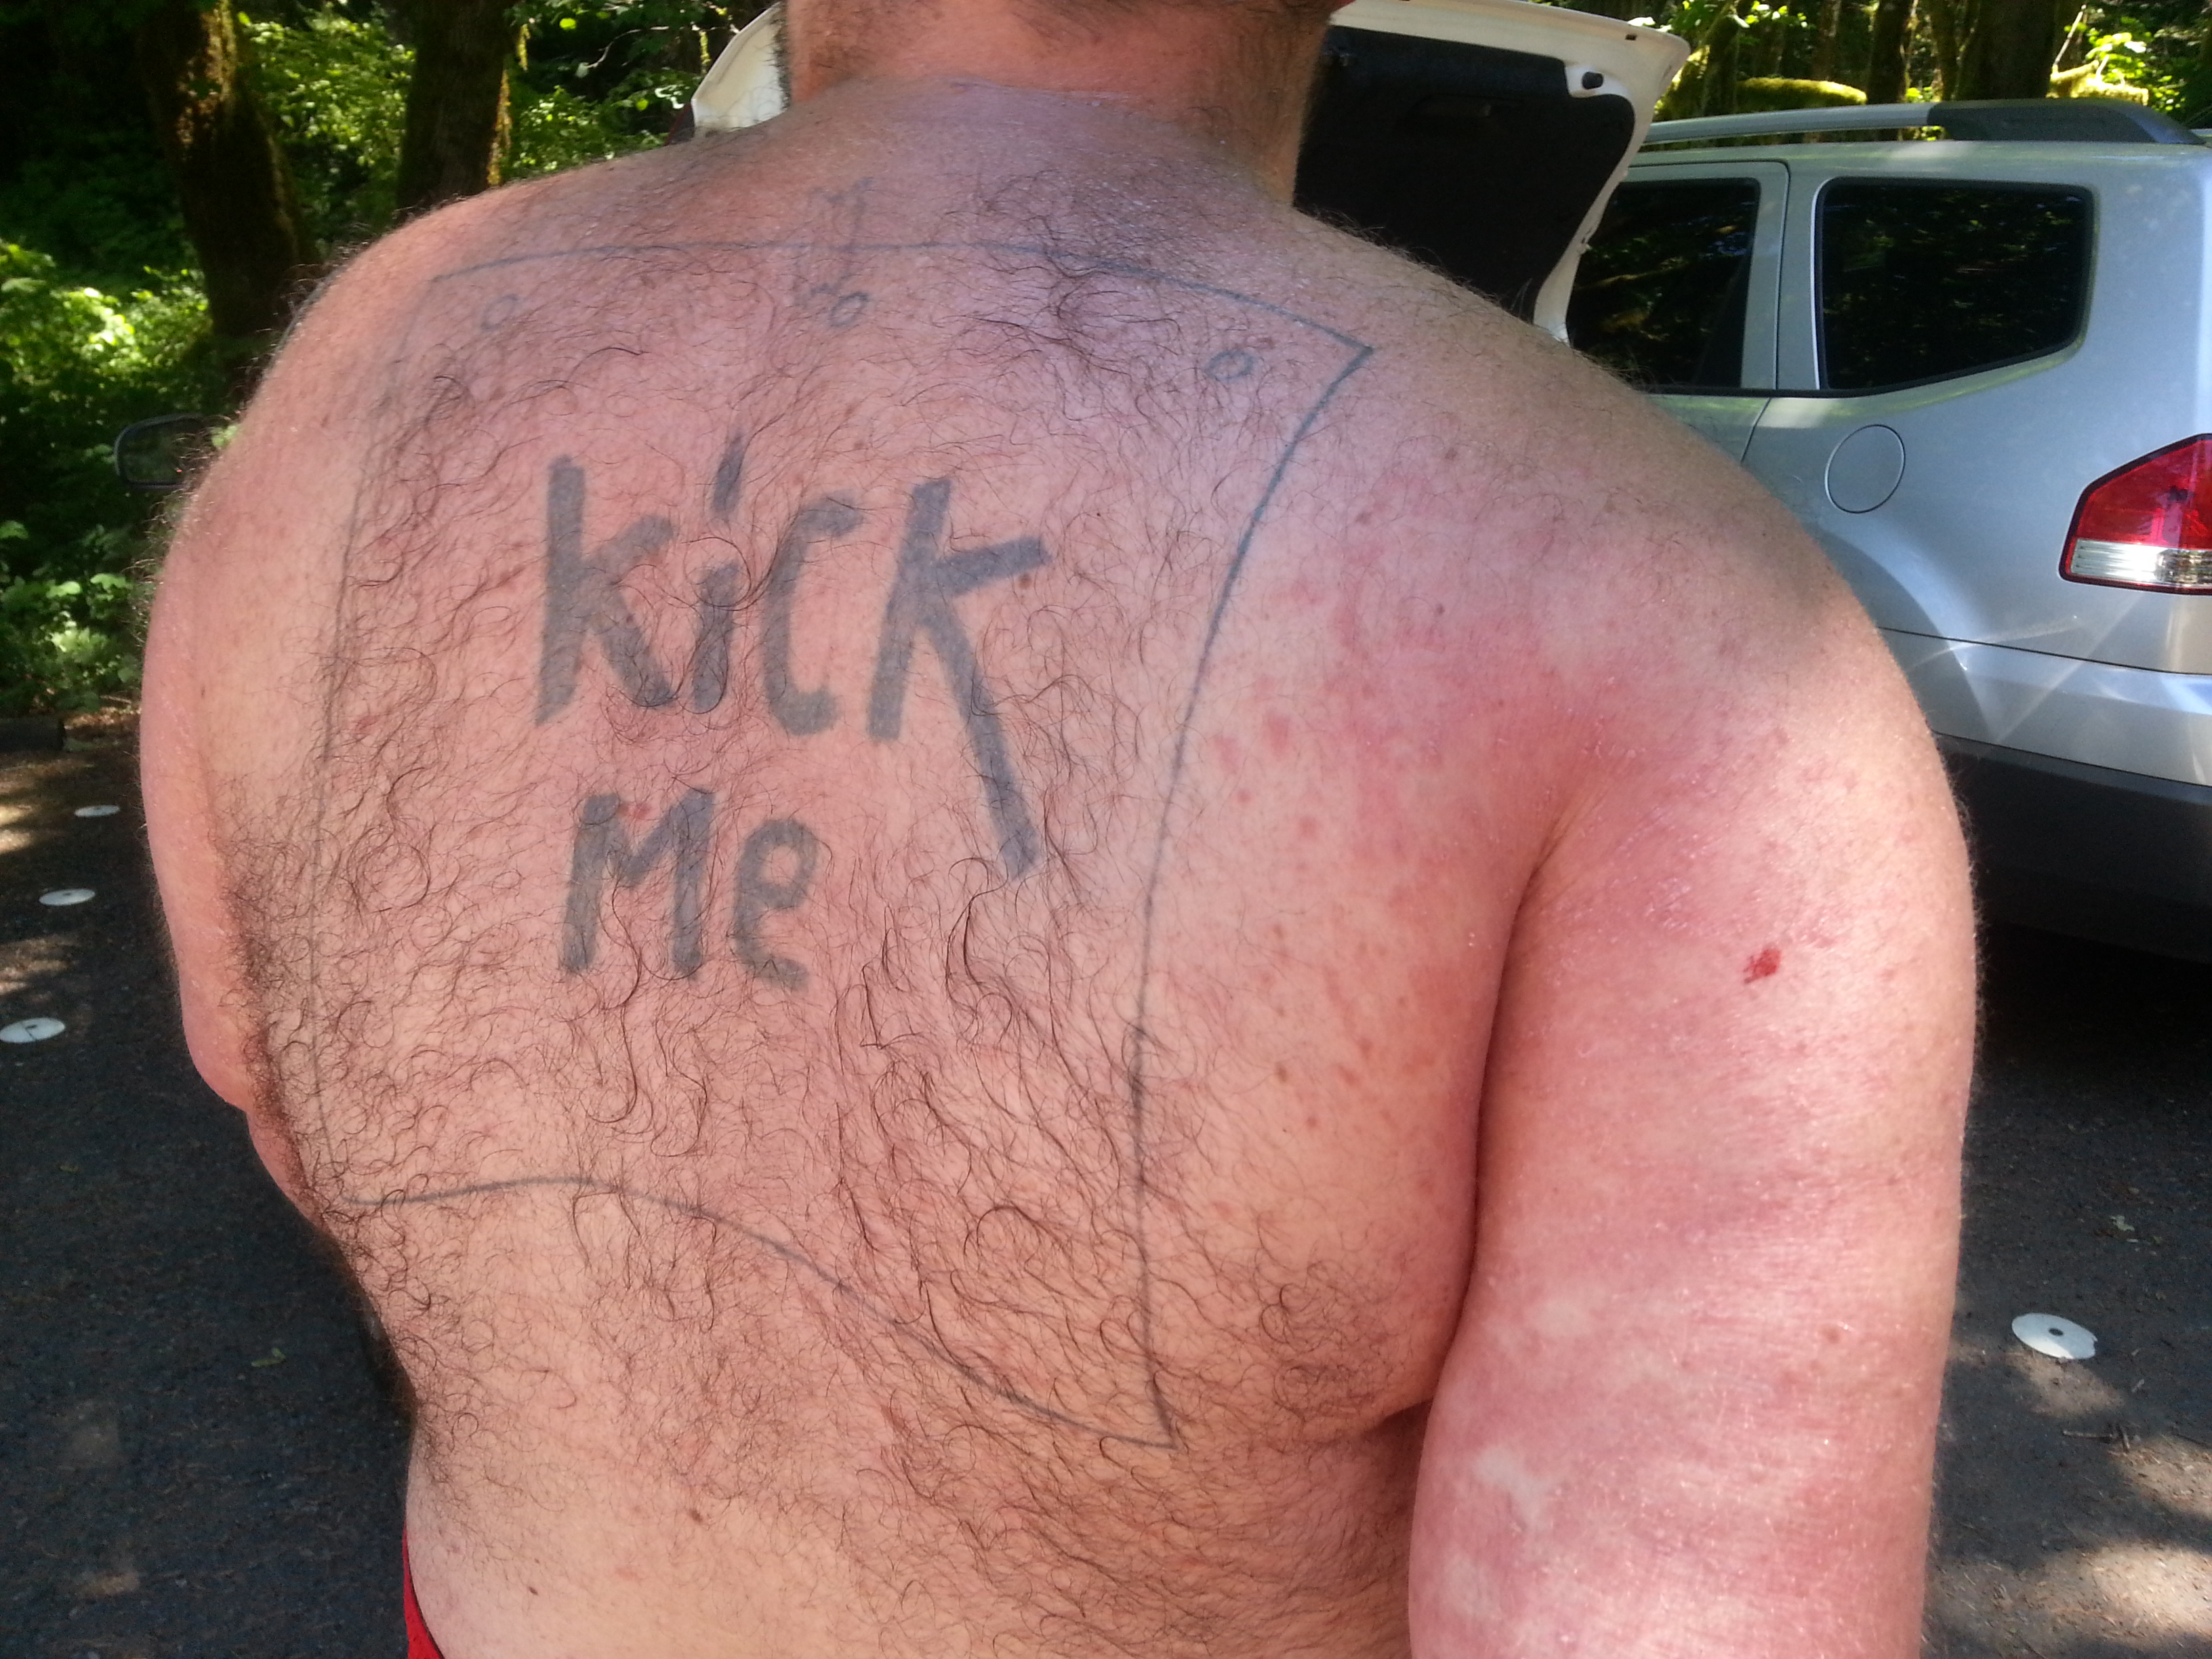 KICK ME tattoo on a man's back